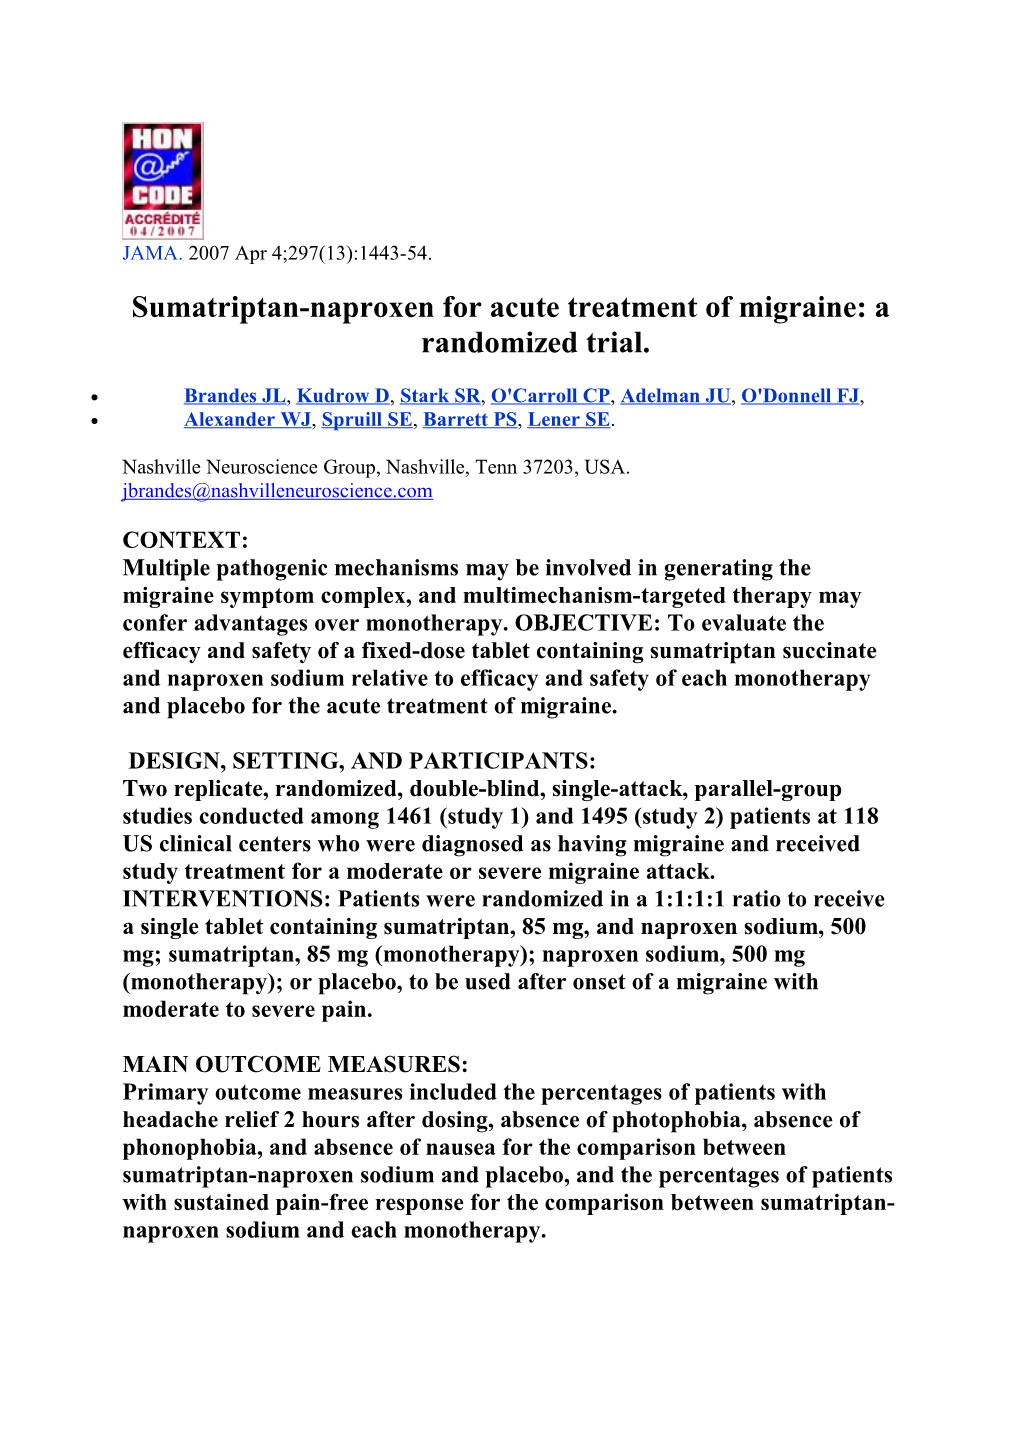 Sumatriptan-Naproxen for Acute Treatment of Migraine: a Randomized Trial